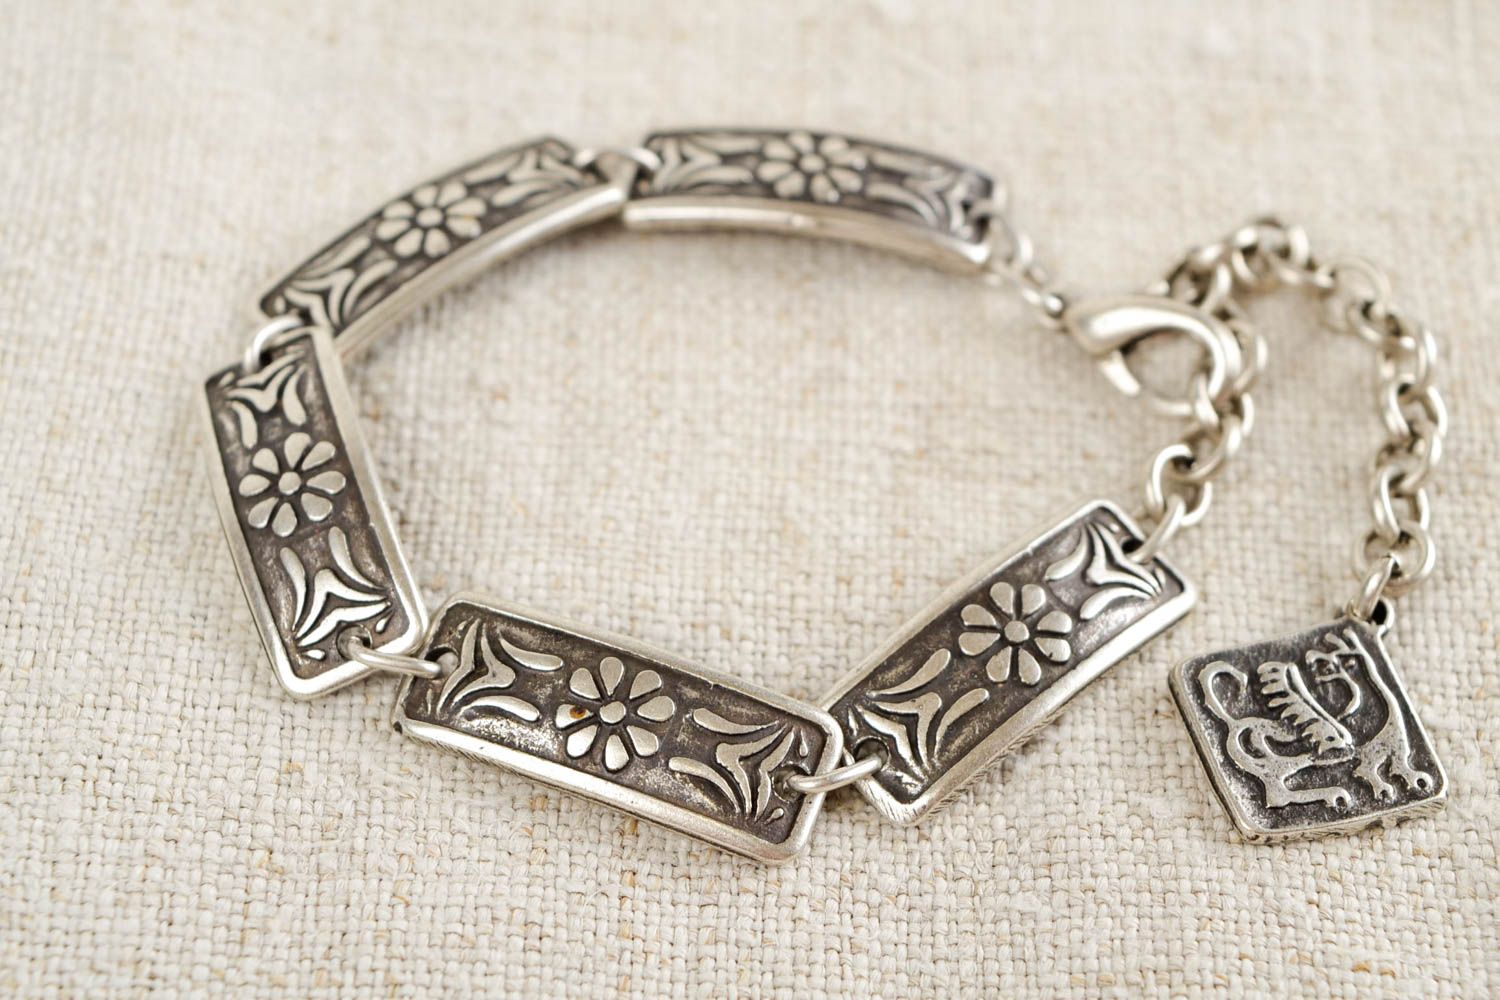 Handmade womens bracelet design metal bracelet fashion accessories small gifts photo 1